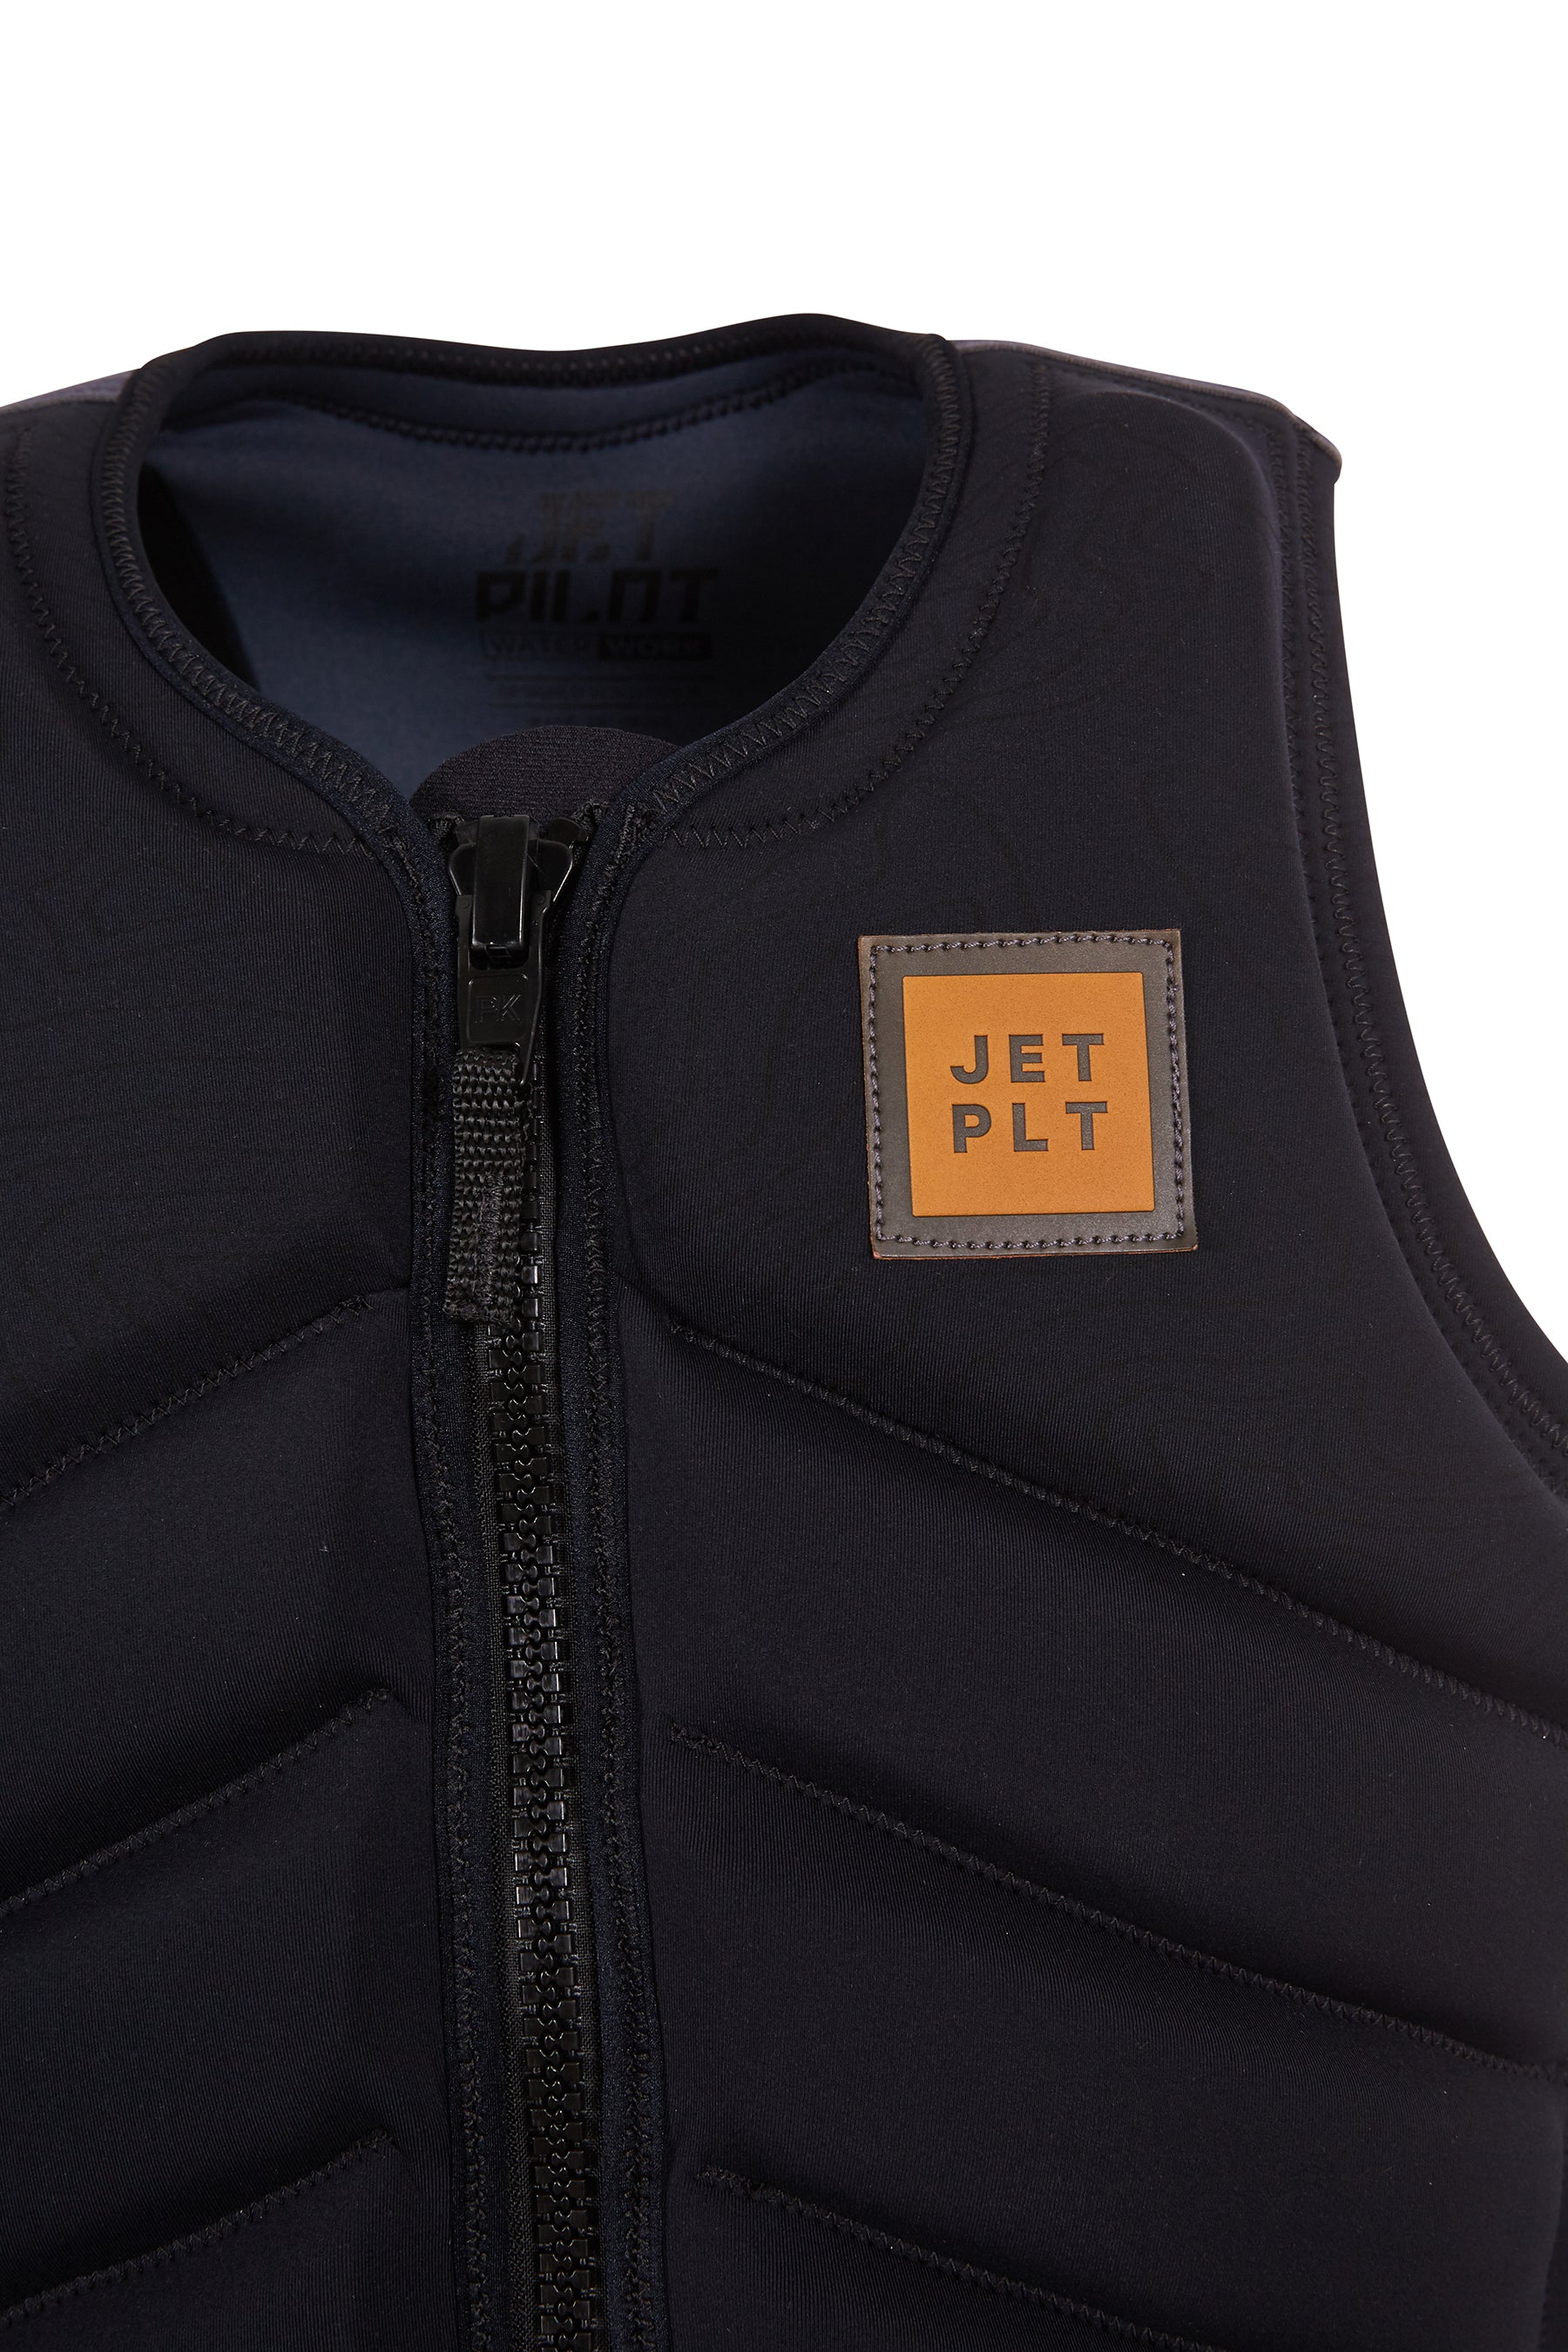 Jetpilot X1 - Felix Fe Mens Neo Vest - Black 5